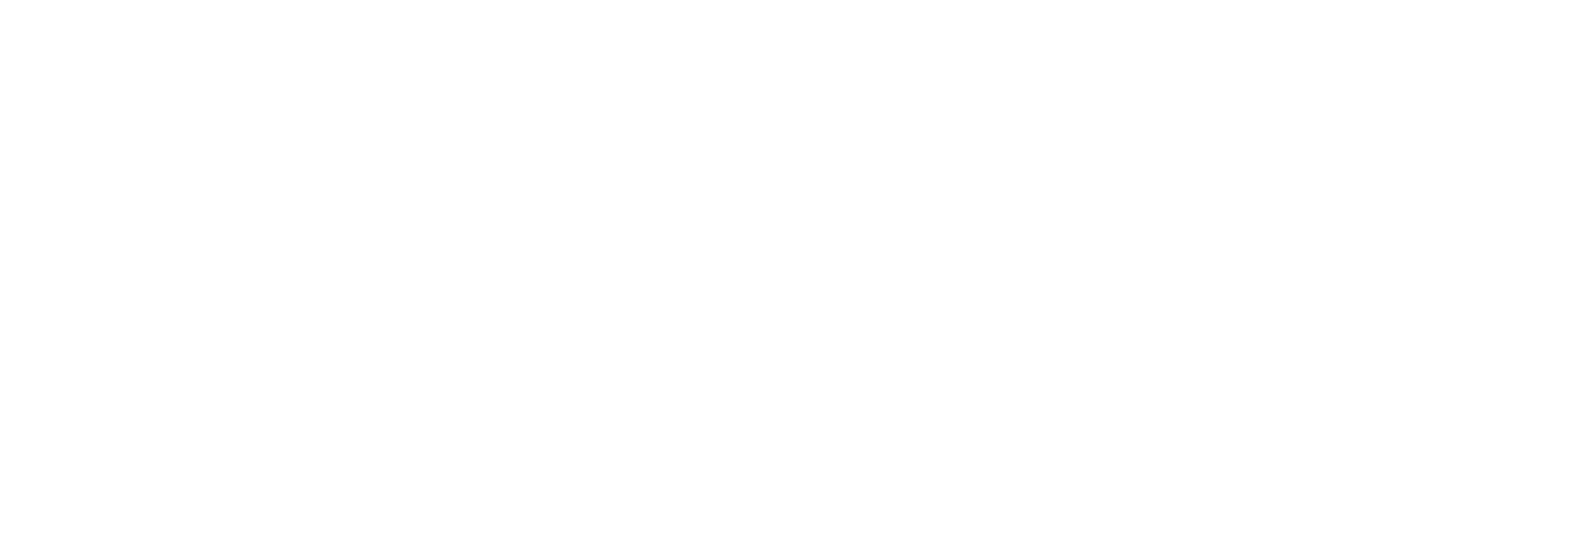 UiPath logo large for dark backgrounds (transparent PNG)